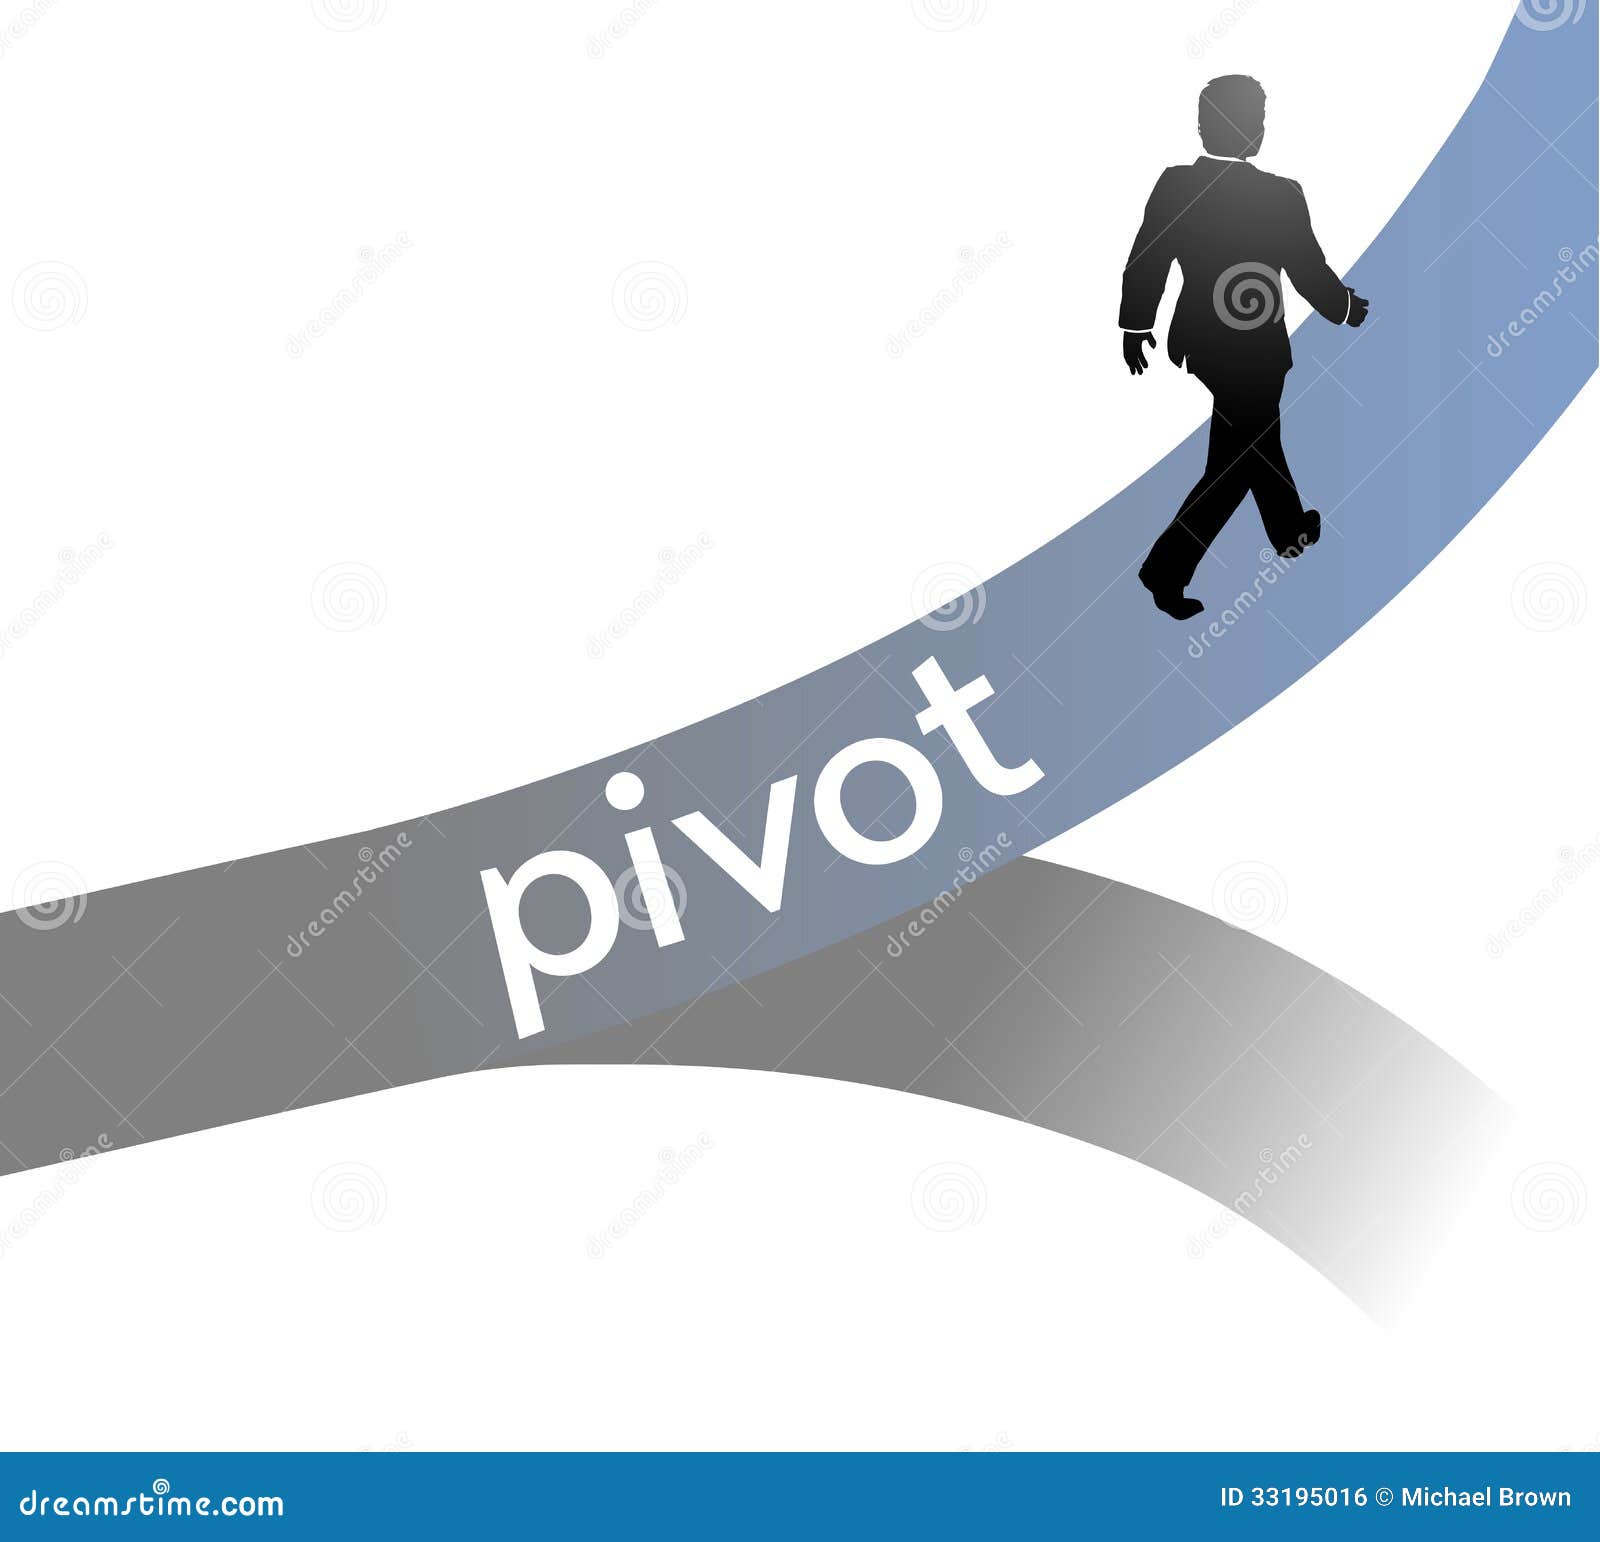 entrepreneur-pivot-lean-startup-strategy-pivots-his-start-up-enterprise-to-new-business-model-33195016.jpg